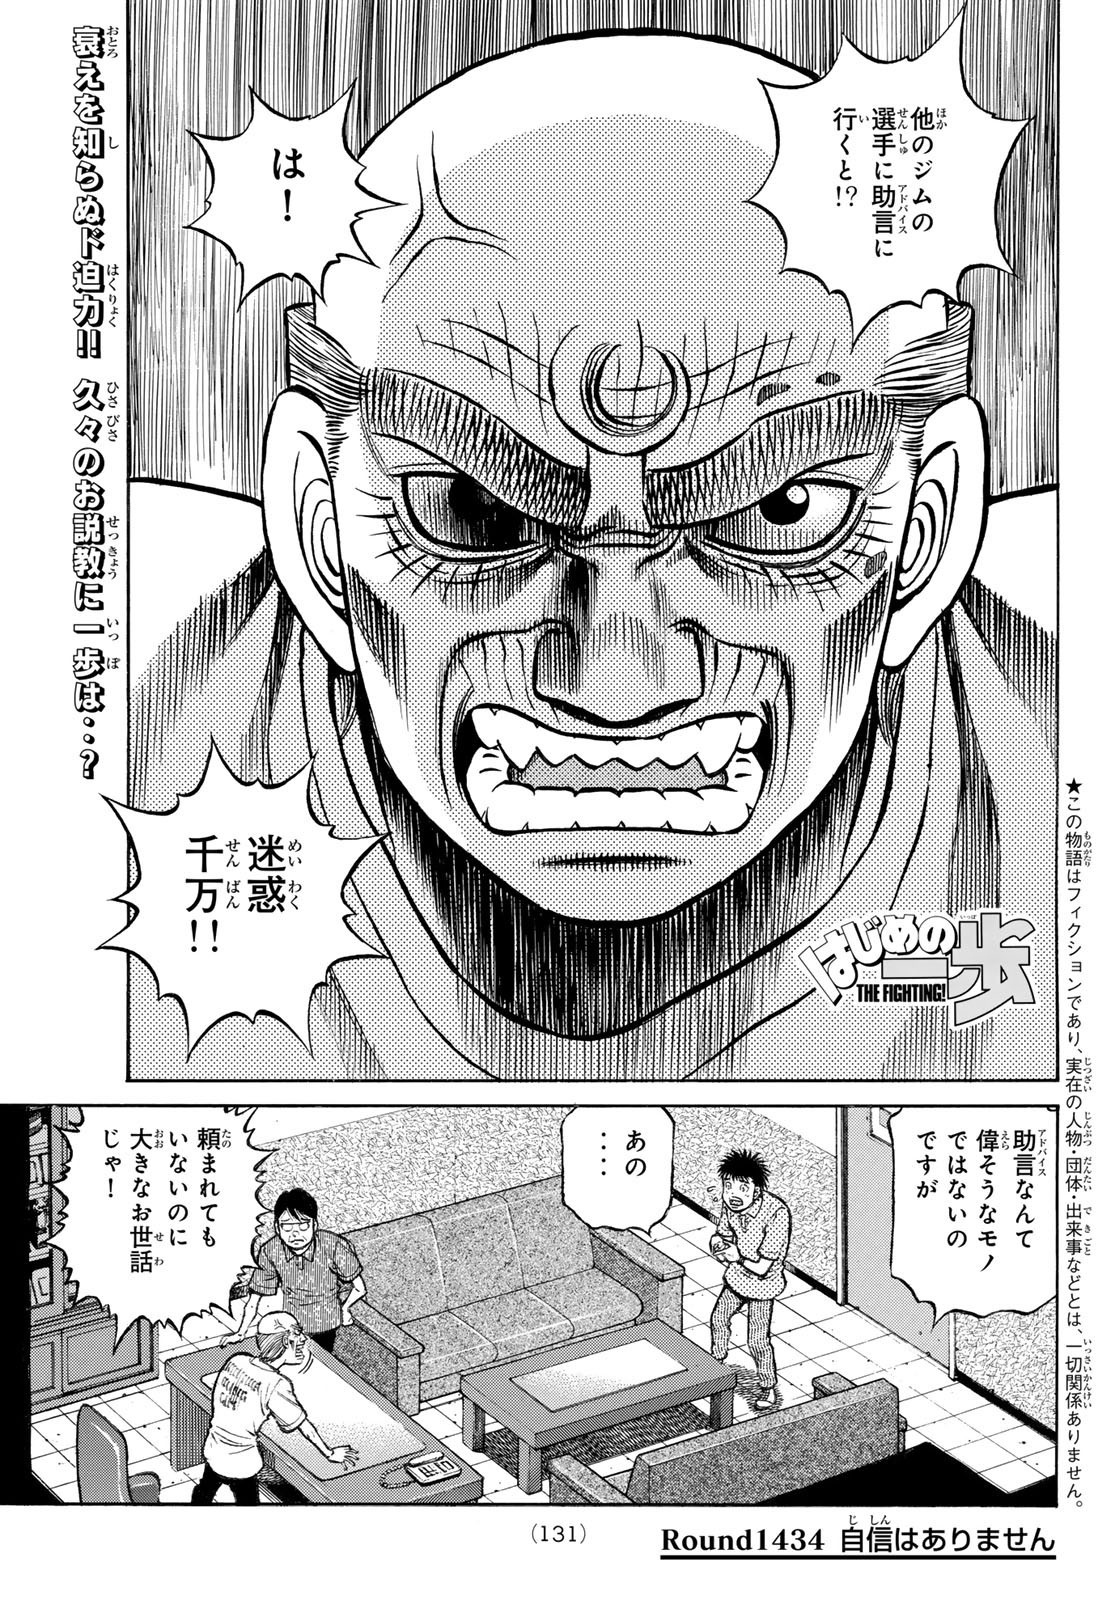 Hajime no Ippo - Chapter 1434 - Page 1